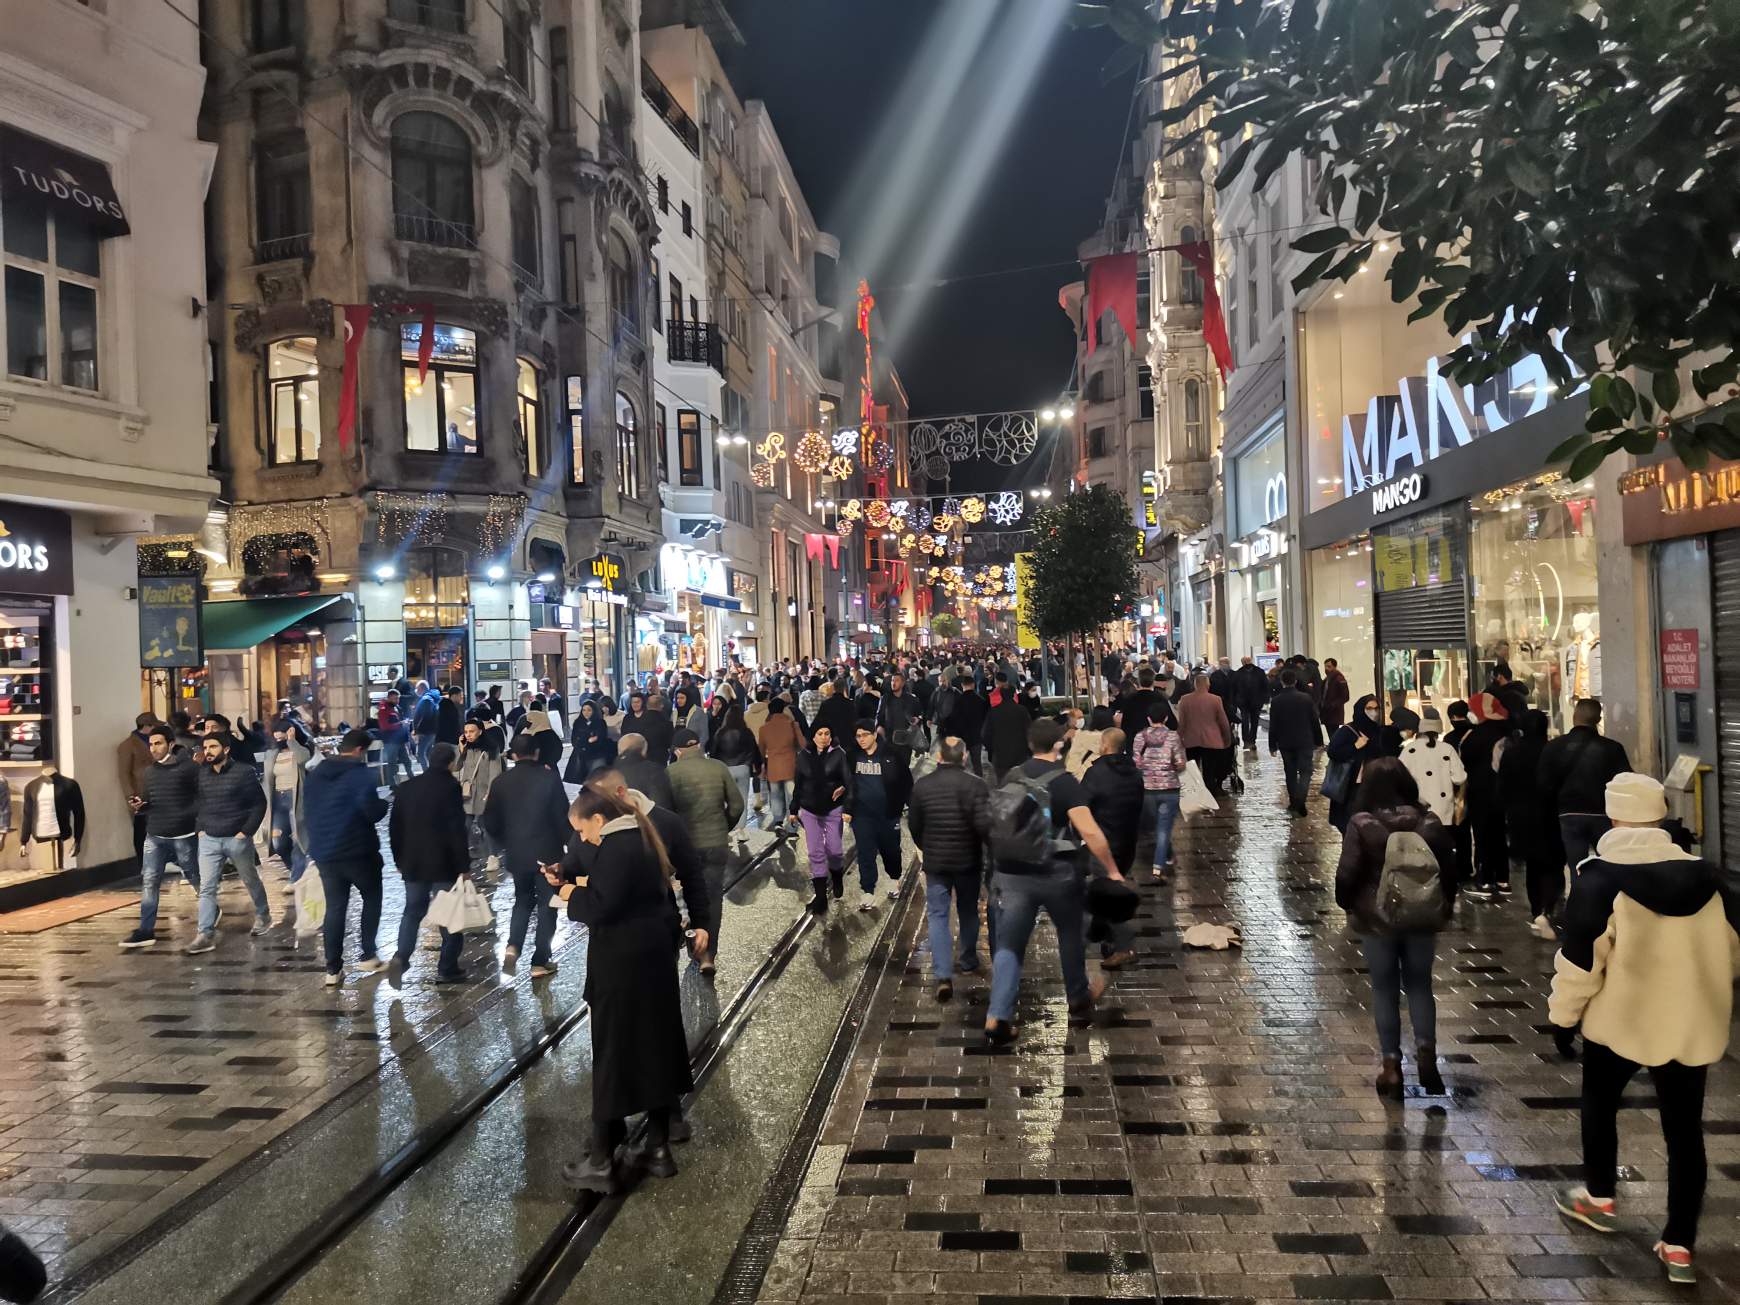 Kuttyomfitty Társulat-Isztambul